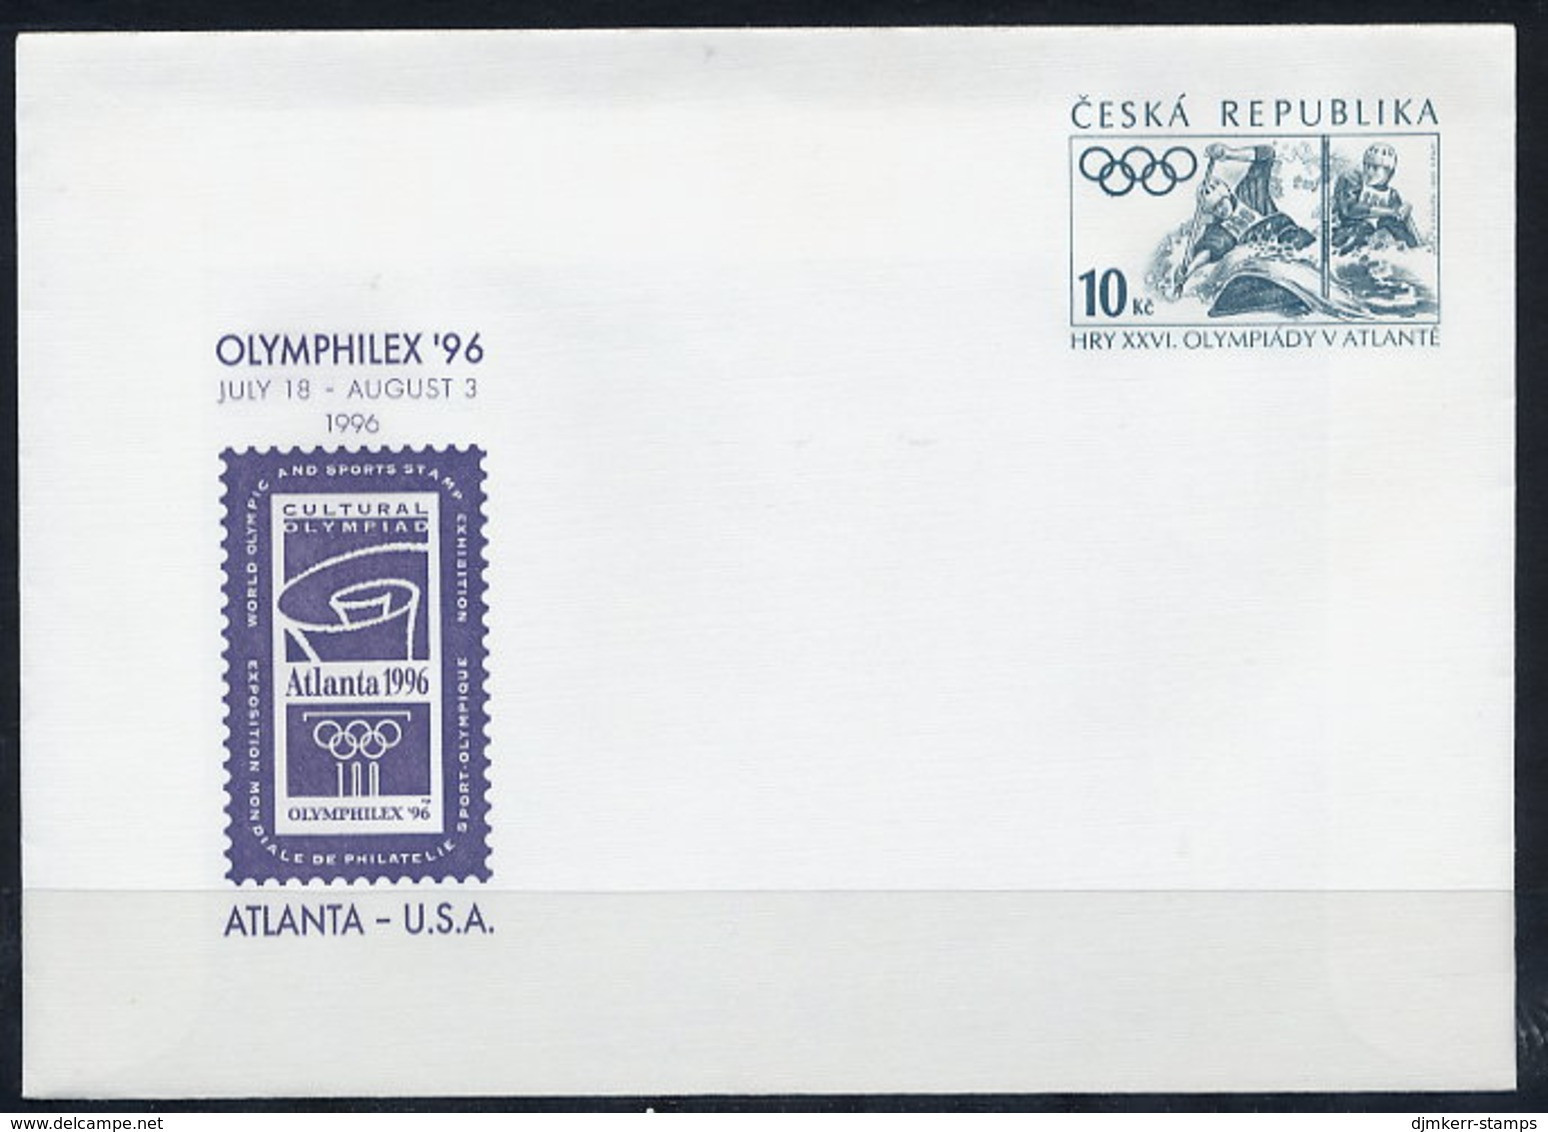 CZECH REPUBLIC 1996 10 Kc Envelope OLYMPHILEX '96 Unused.  Michel U3 - Buste